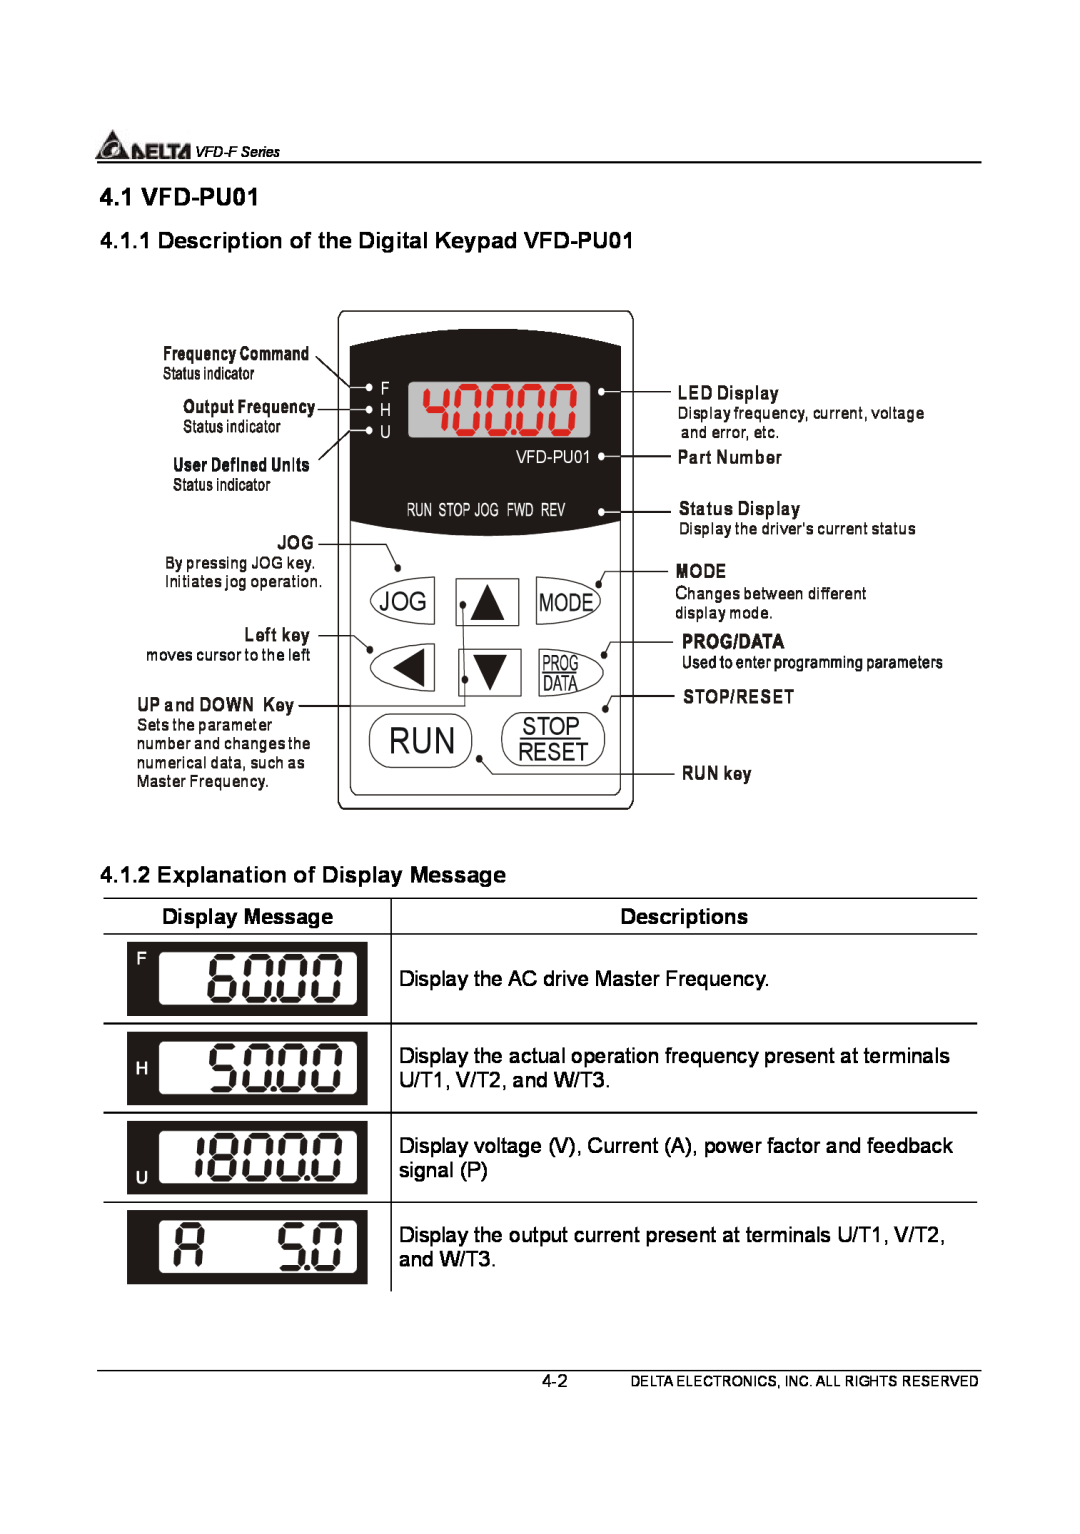 Delta Electronics VFD-F Series Stop, Reset, Description of the Digital Keypad VFD-PU01, Explanation of Display Message 